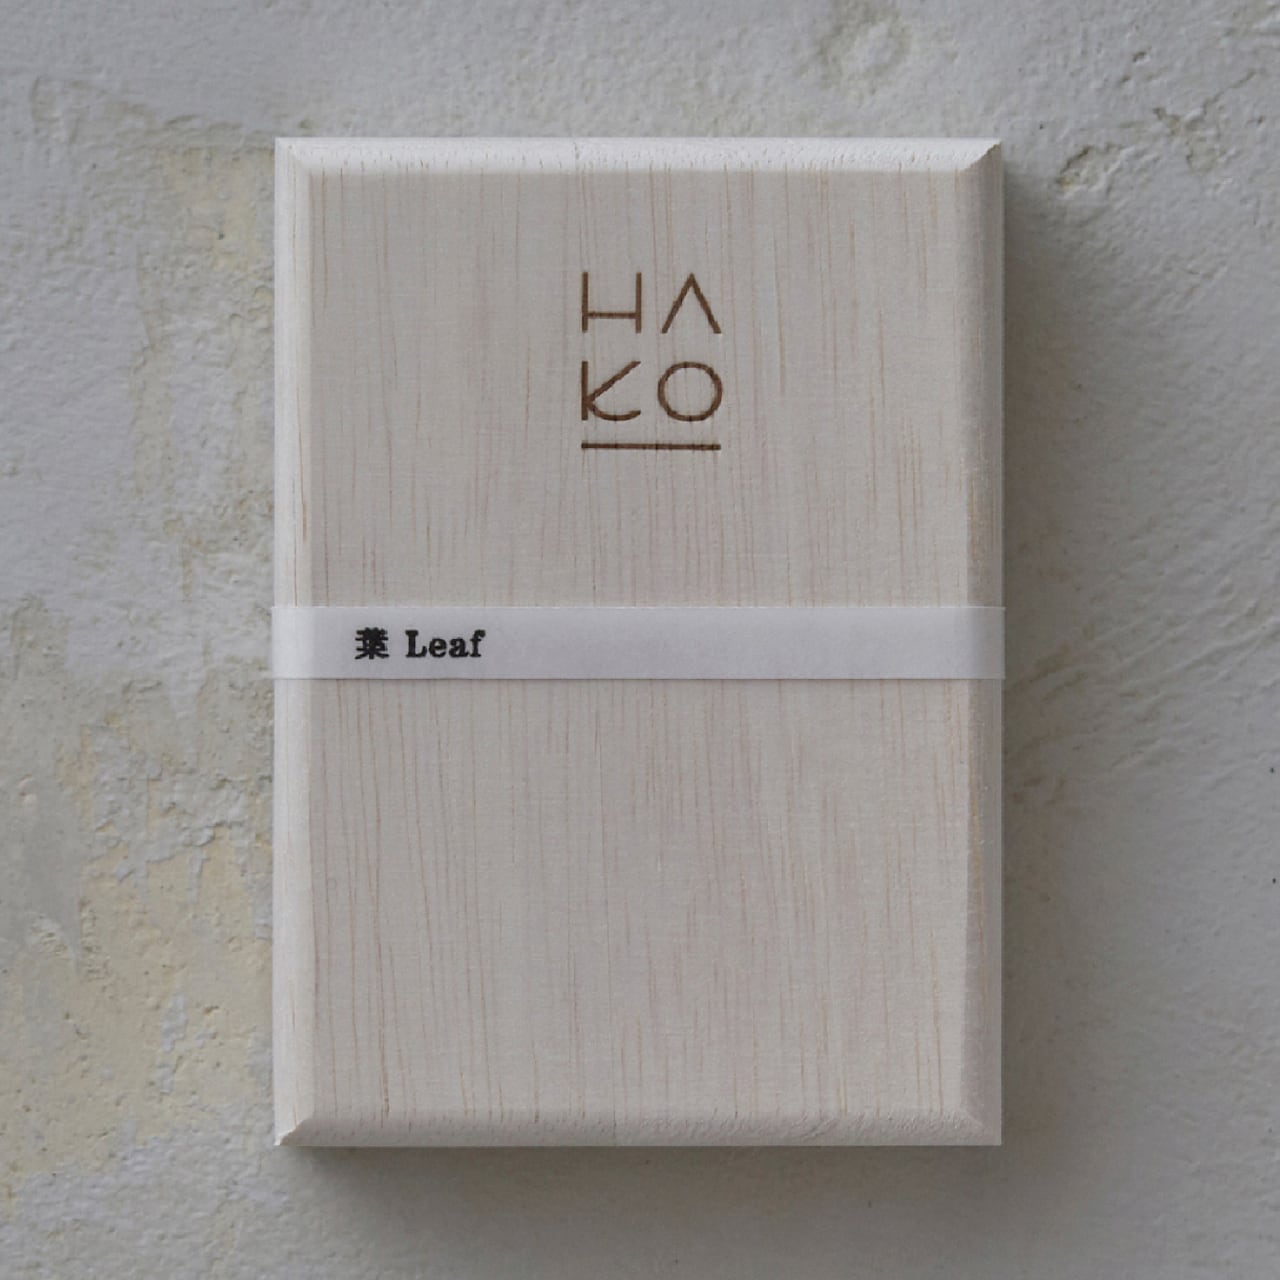 HA KO Incense - Five Piece Set in Wood Box